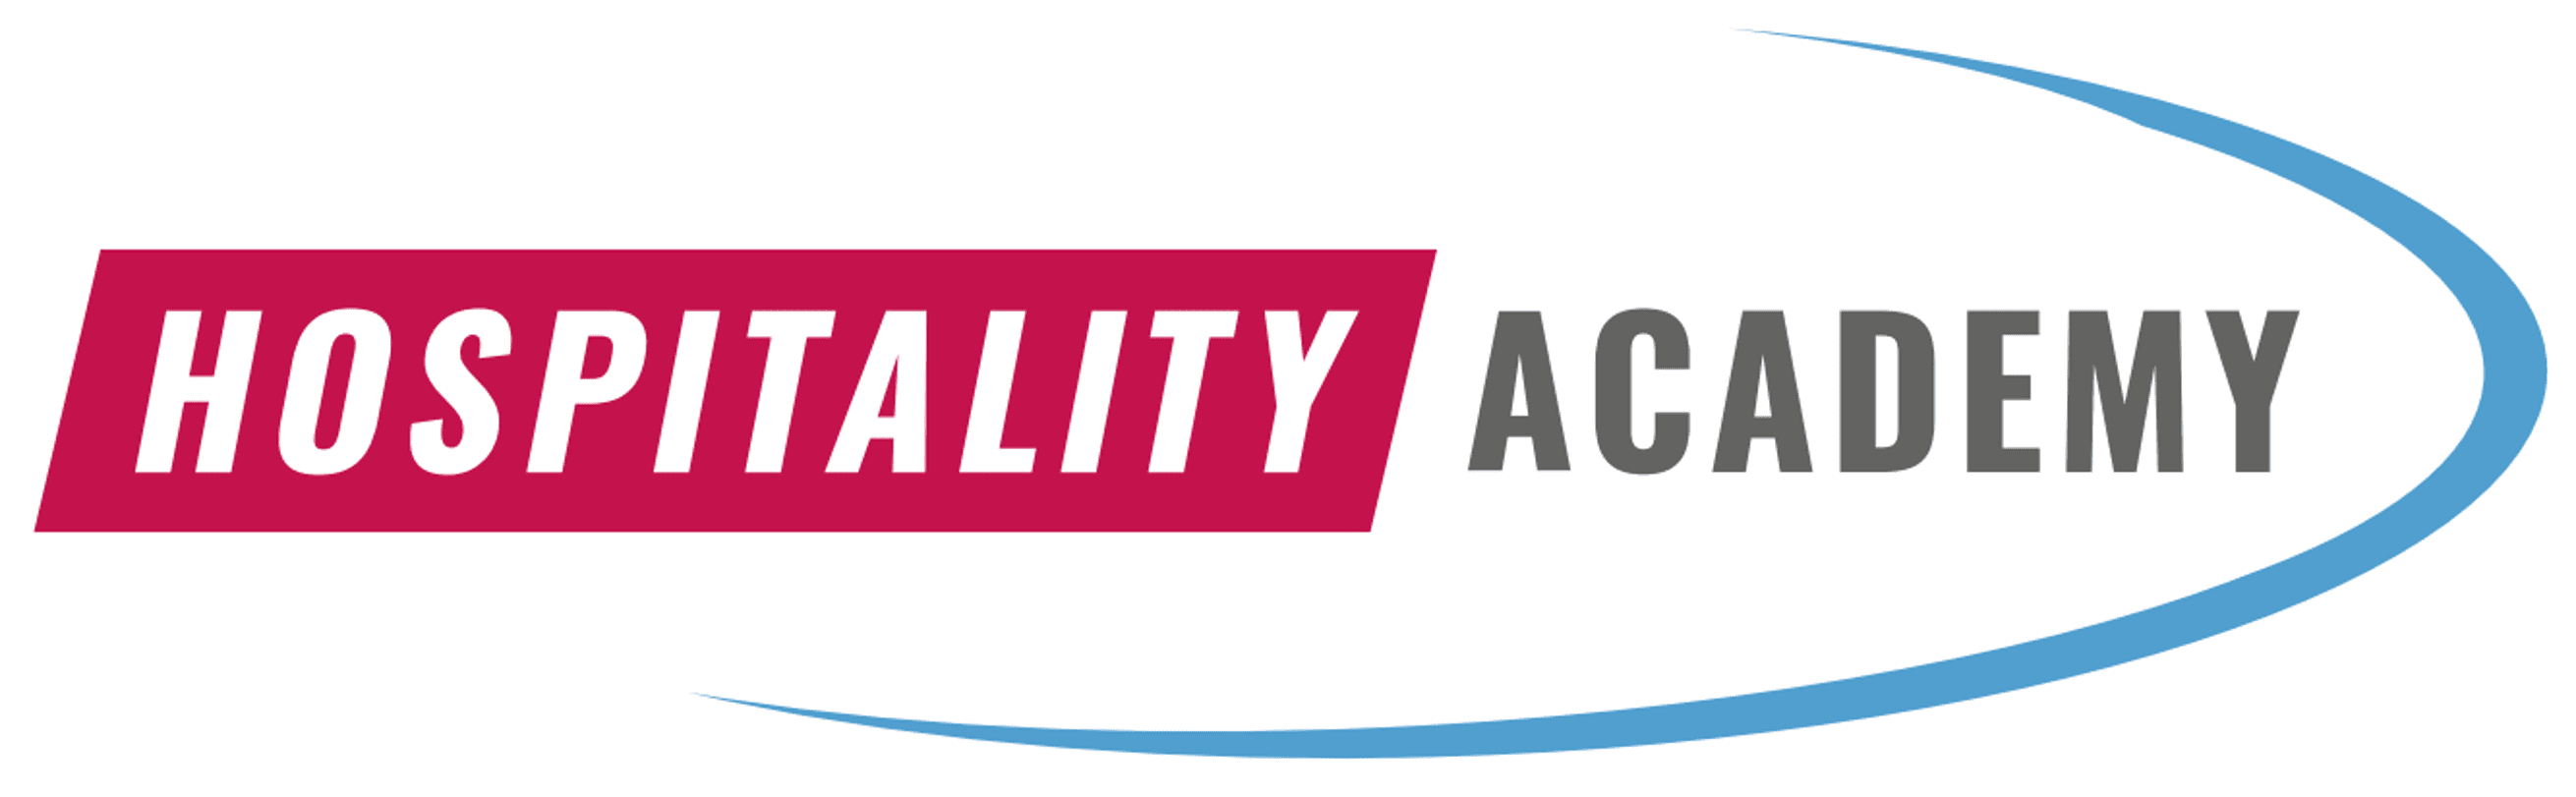 logo hospitality academy